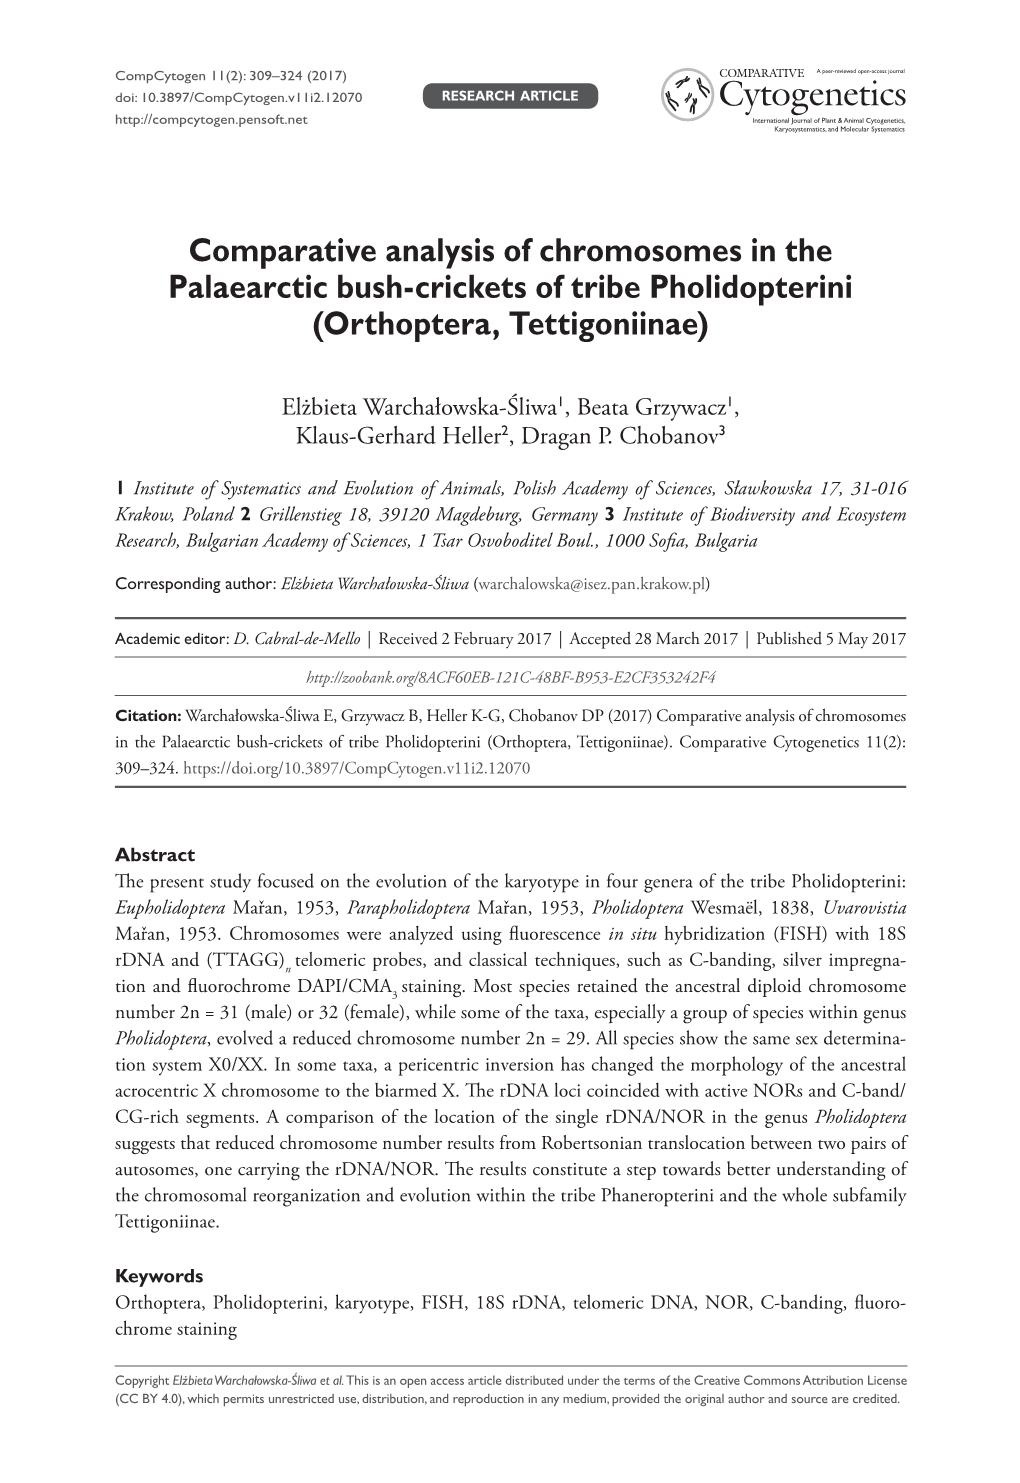 Comparative Analysis of Chromosomes in the Palaearctic Bush-Crickets of Tribe Pholidopterini (Orthoptera, Tettigoniinae)